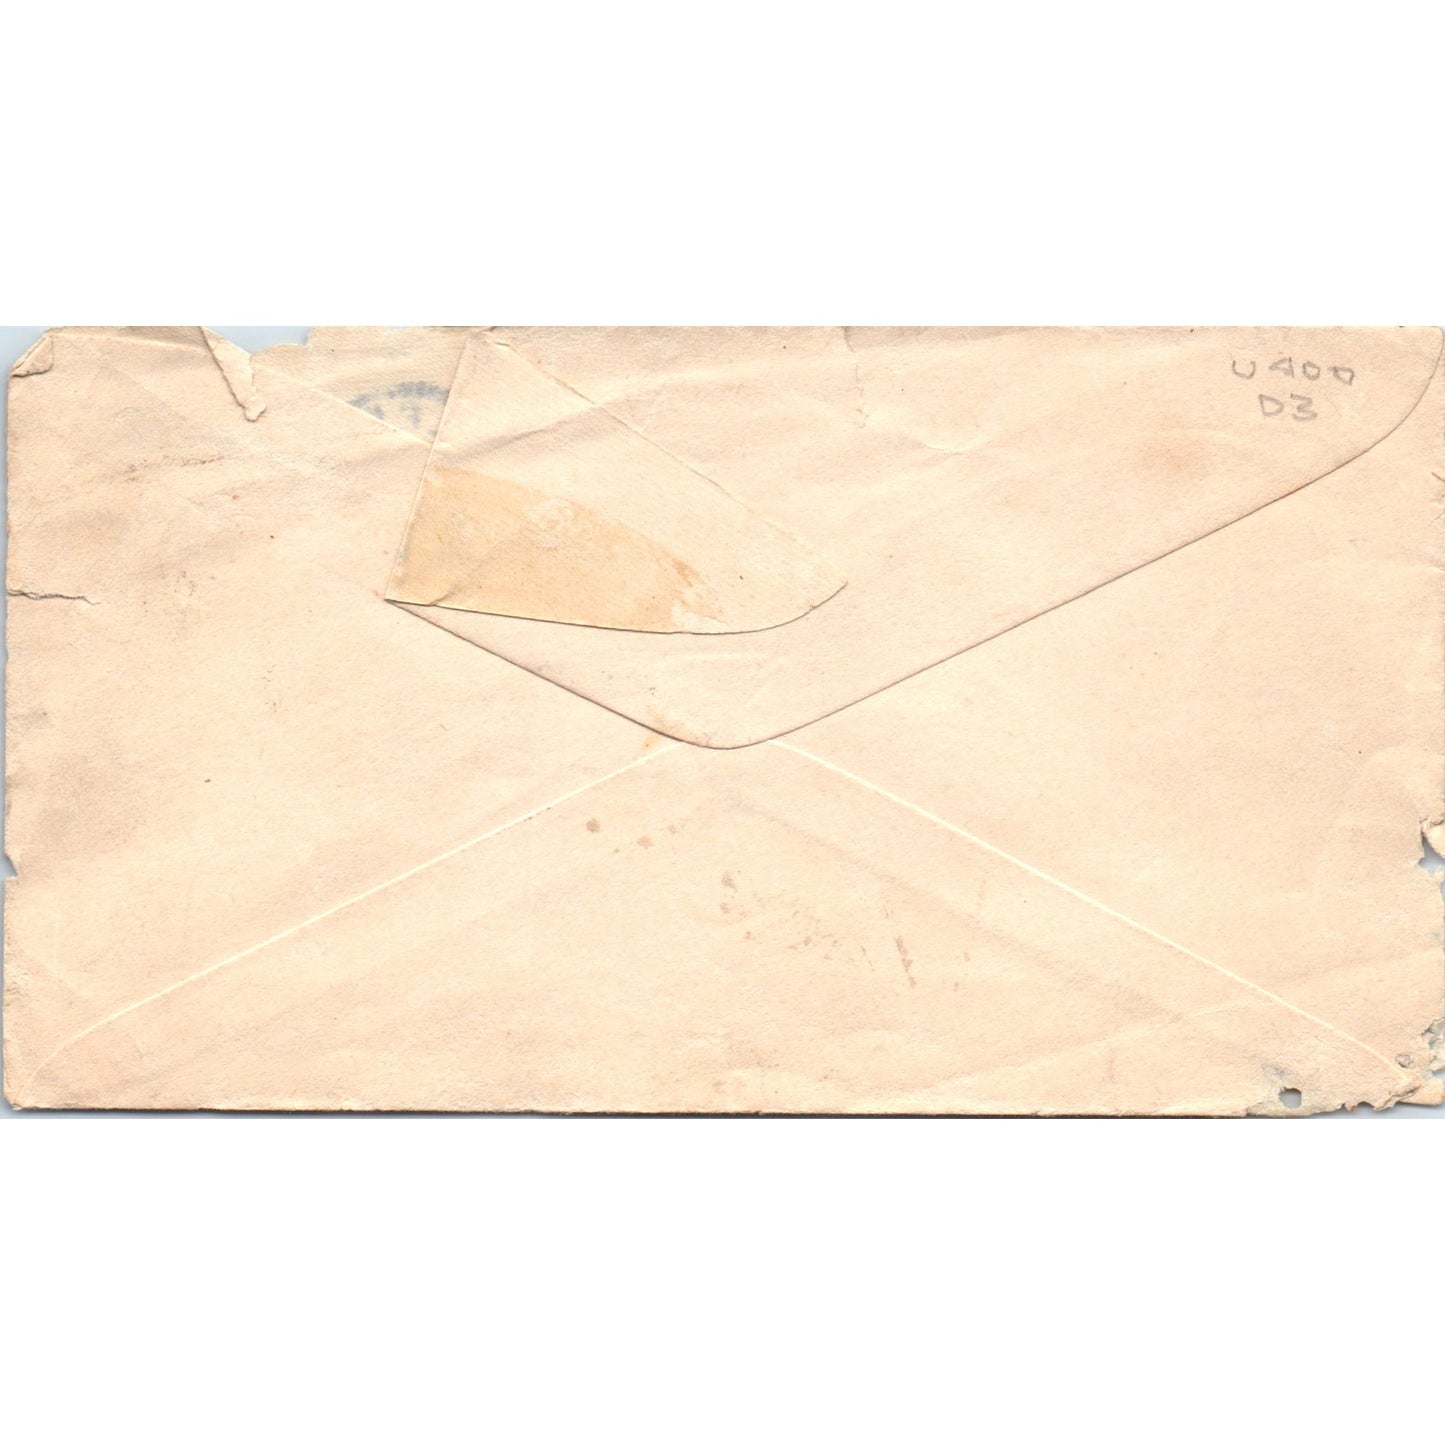 c1910 Mr. Vincent Rambo Lee Lime Company MA Postal Cover Envelope TG7-PC2